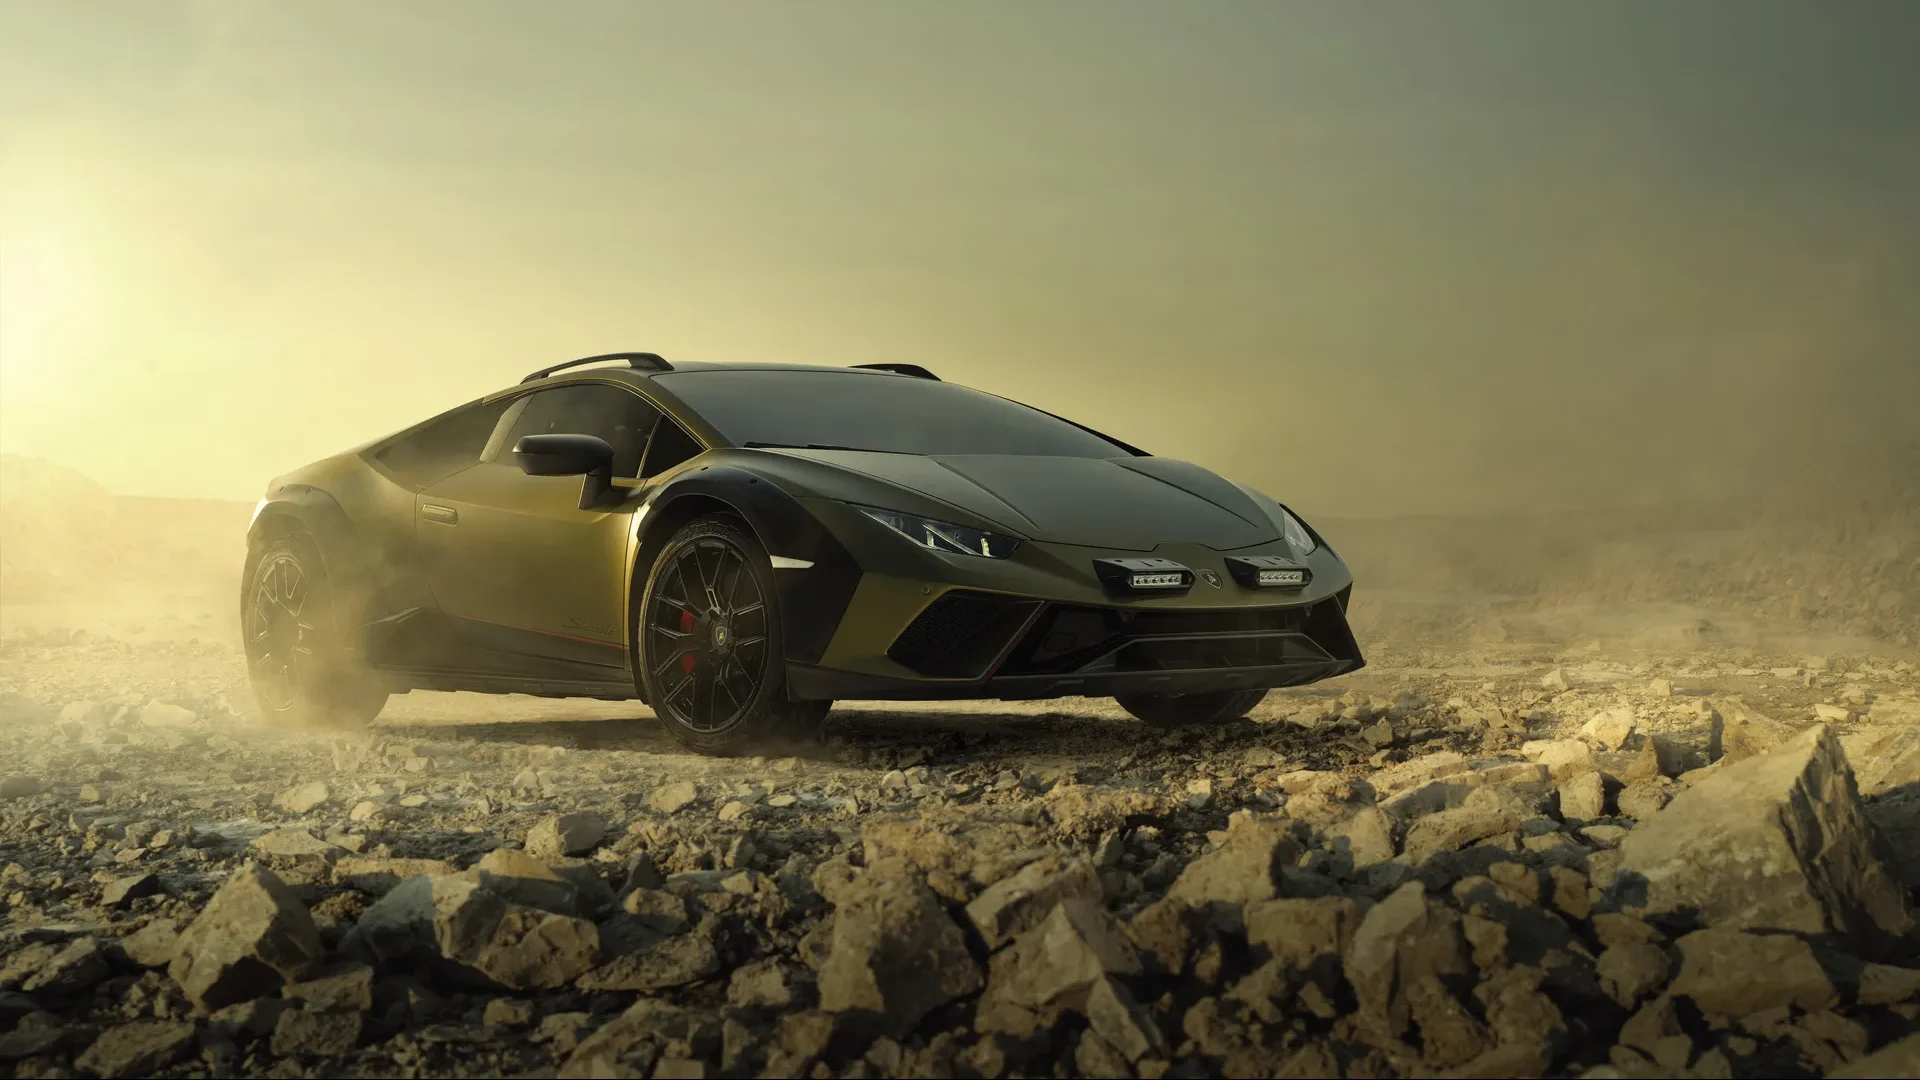 El Lamborghini Huracán Sterrato ya ha sido presentado oficialmente